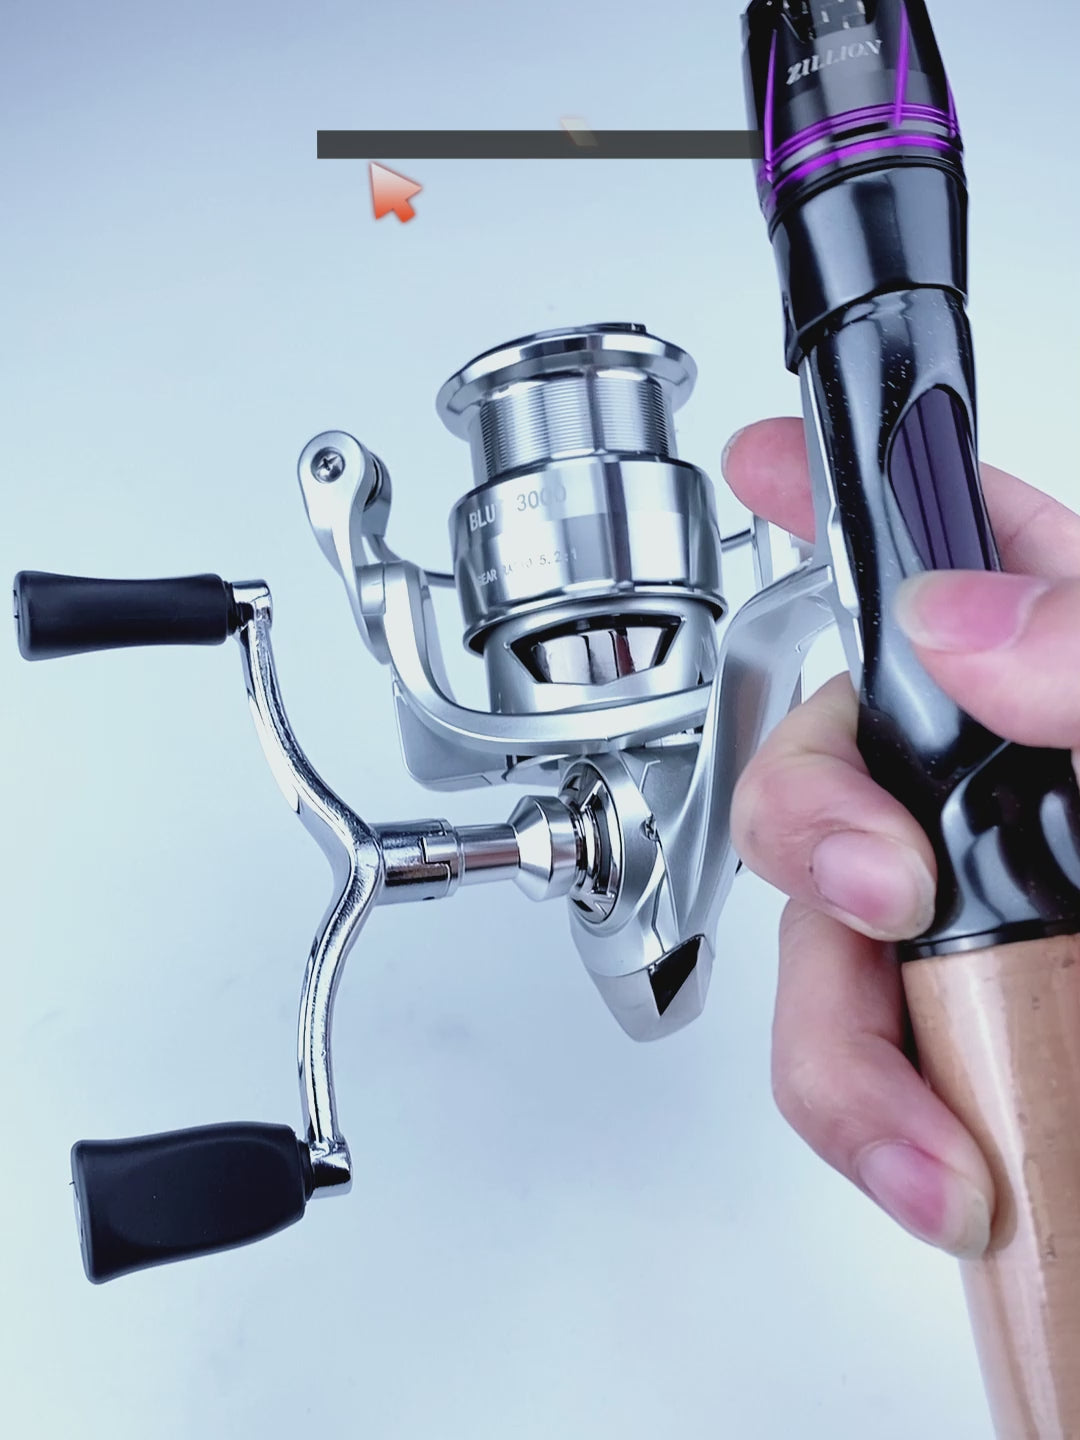 YINYULURE new style BULT fishing spinning reel double handle 6+1 bears